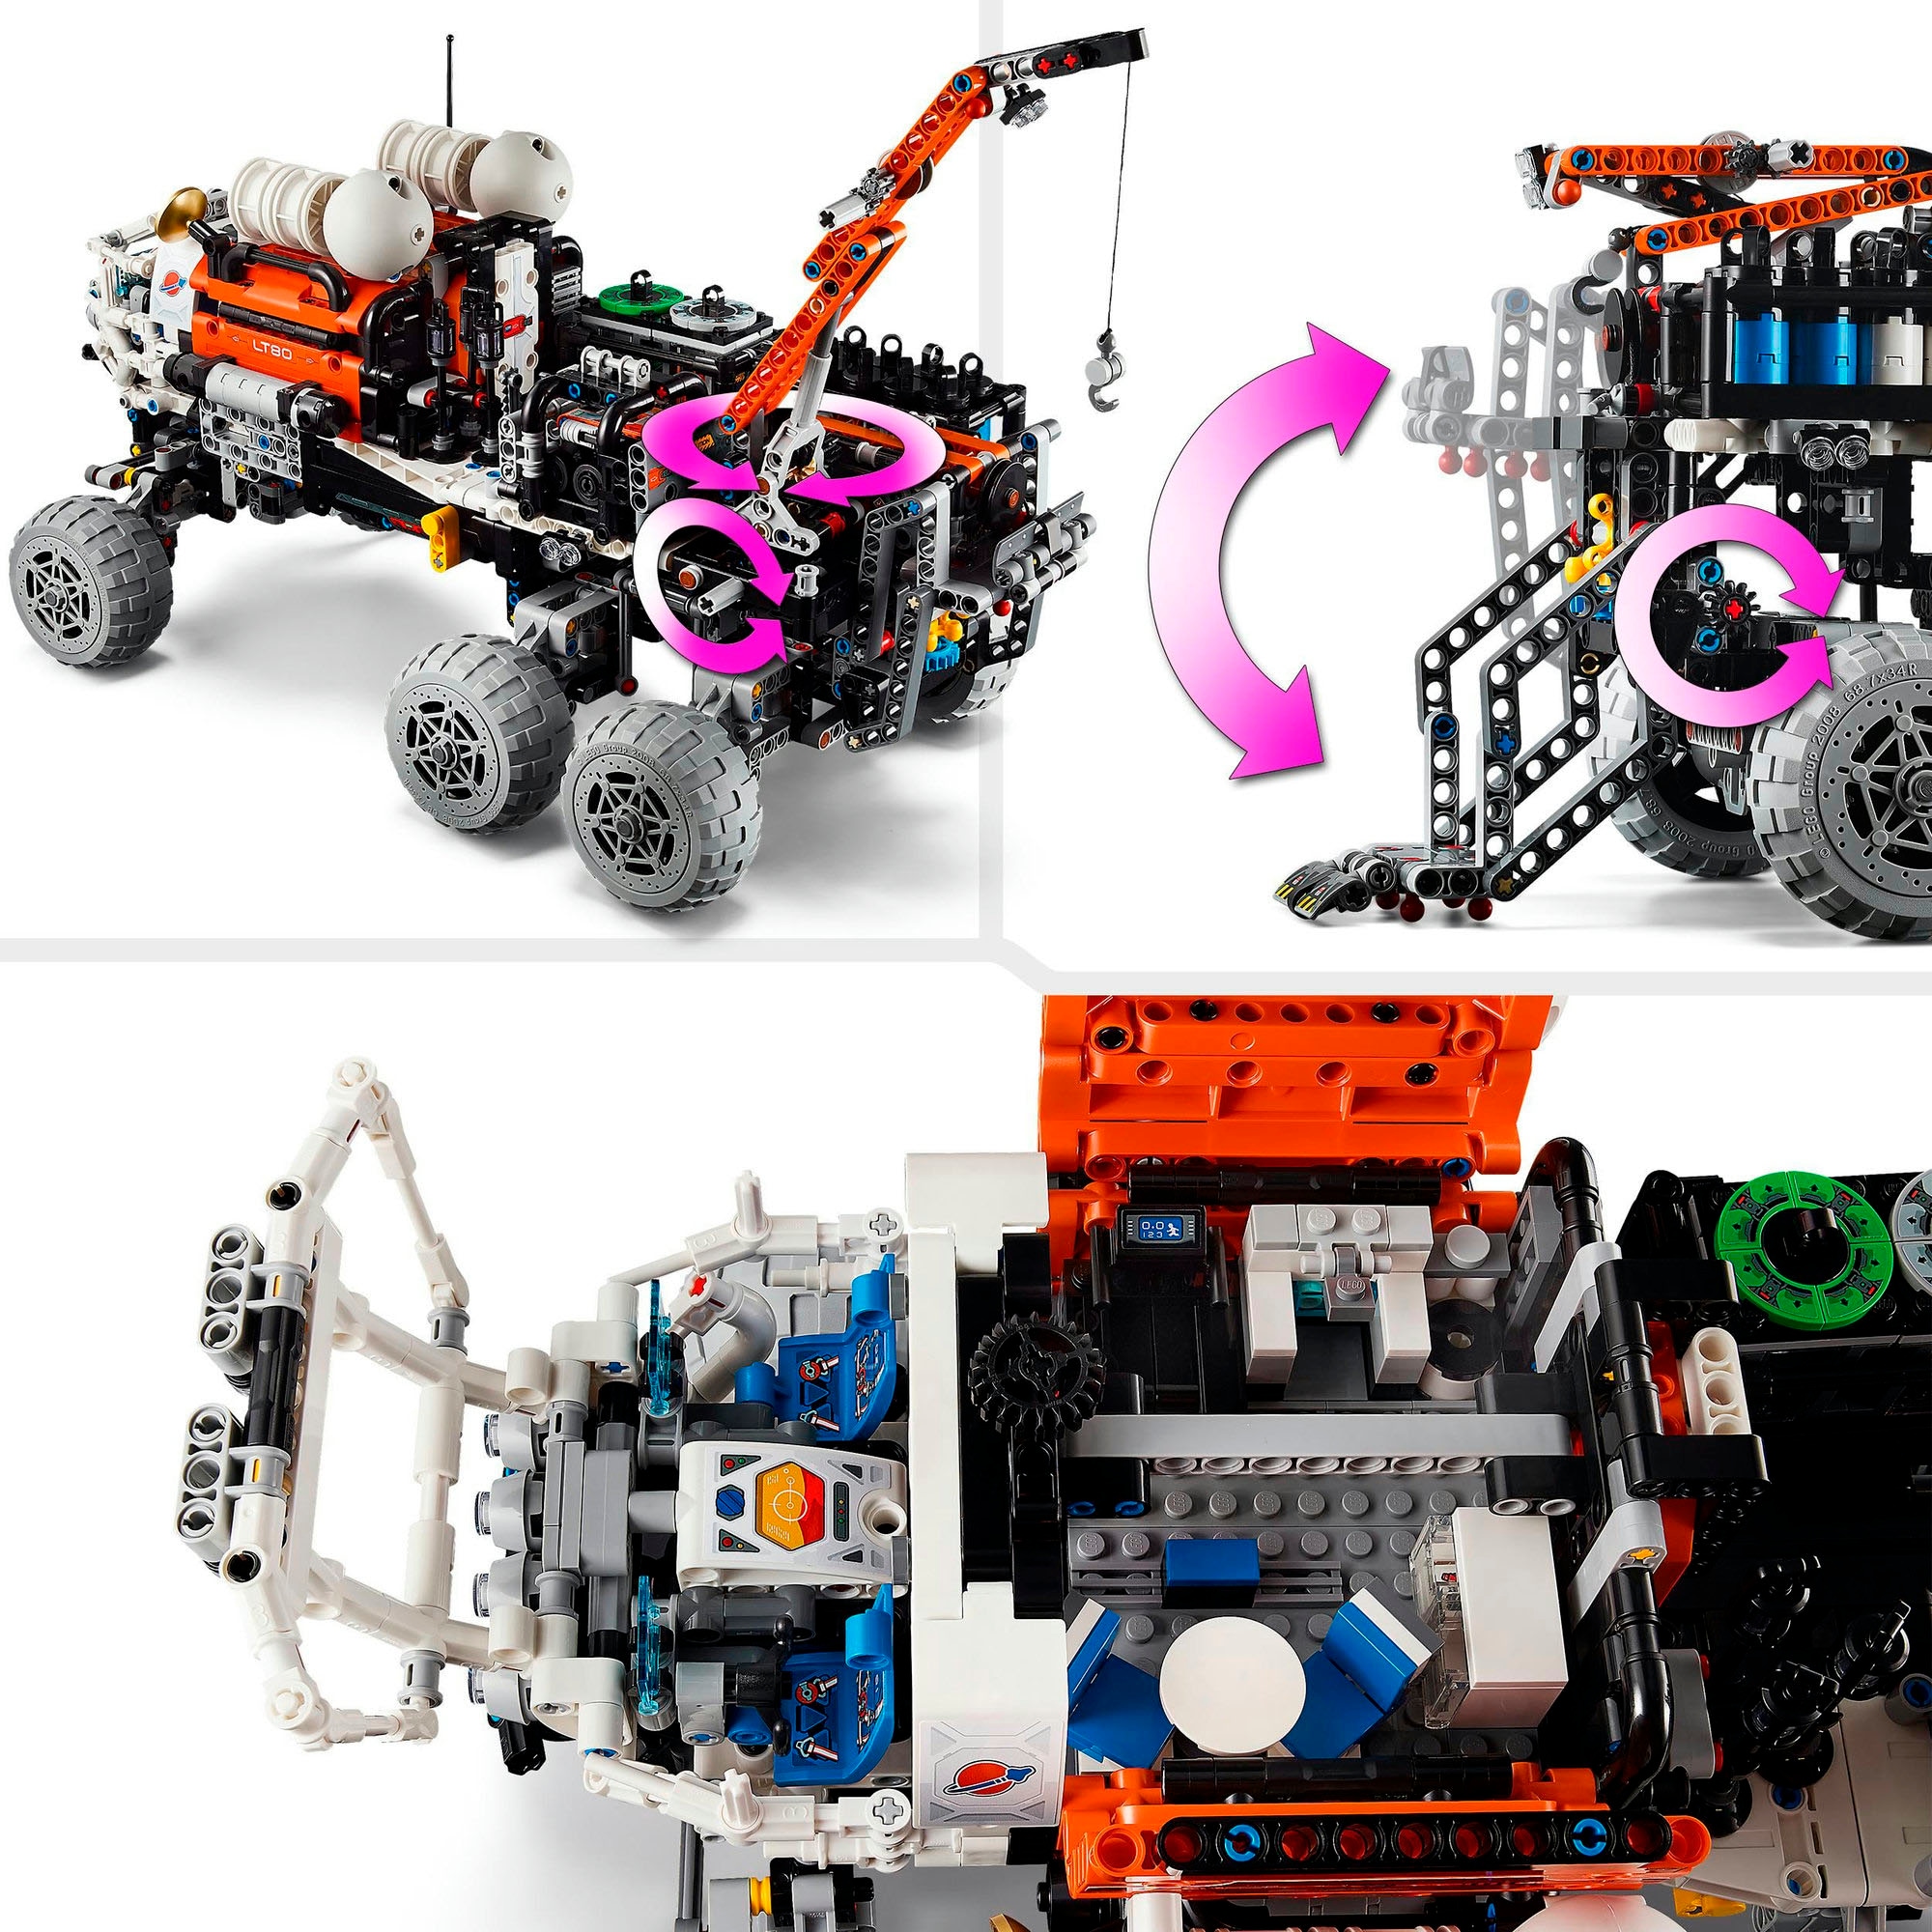 LEGO® Konstruktionsspielsteine »Mars Exploration Rover (42180), LEGO® Technic«, (1599 St.), Made in Europe